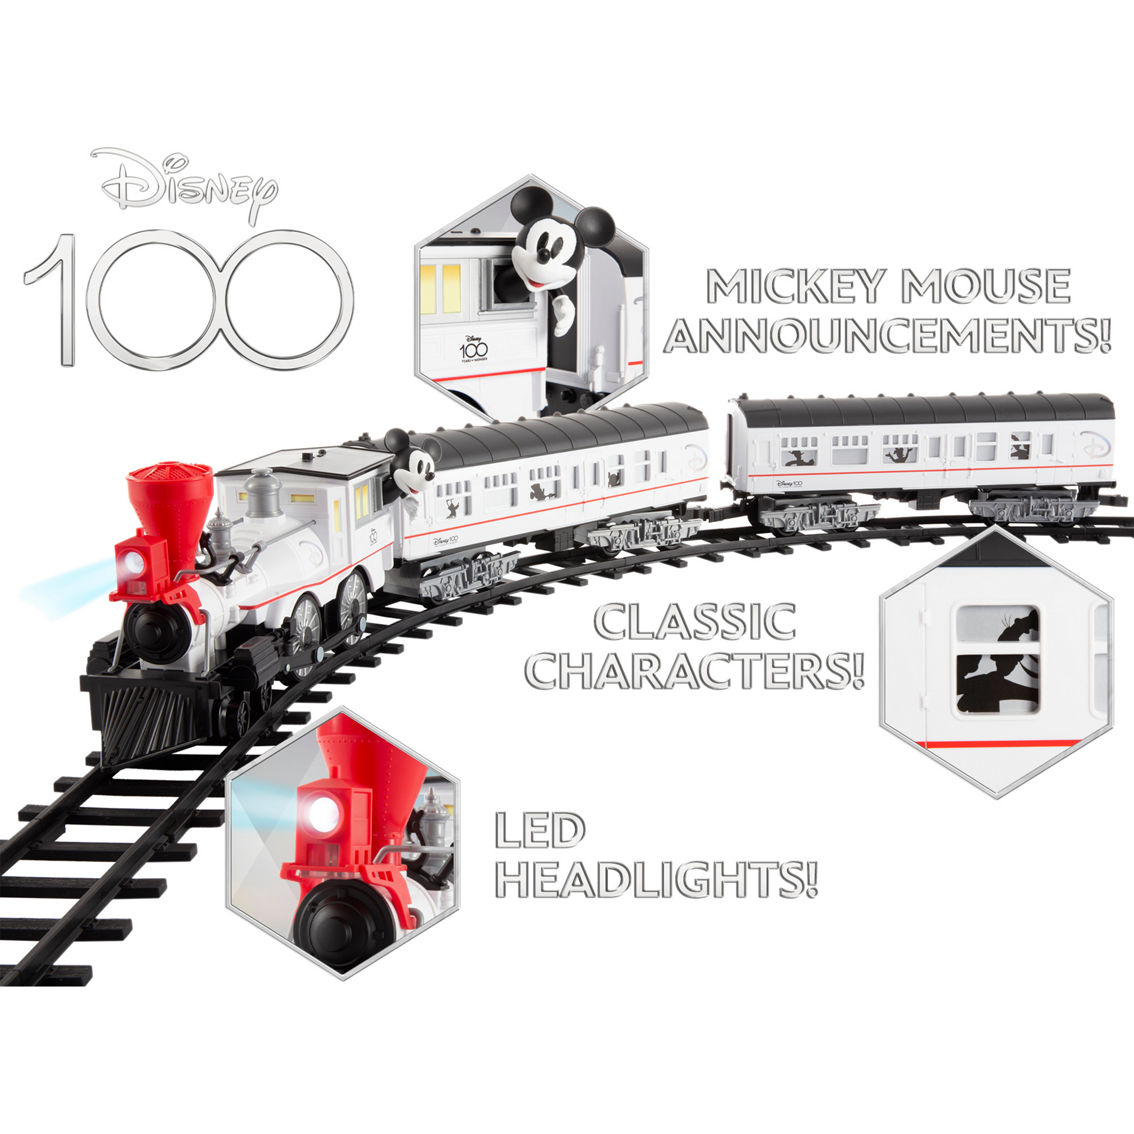 Lionel Trains Disney 100 Celebration Ready to Play Train Set - Image 3 of 3